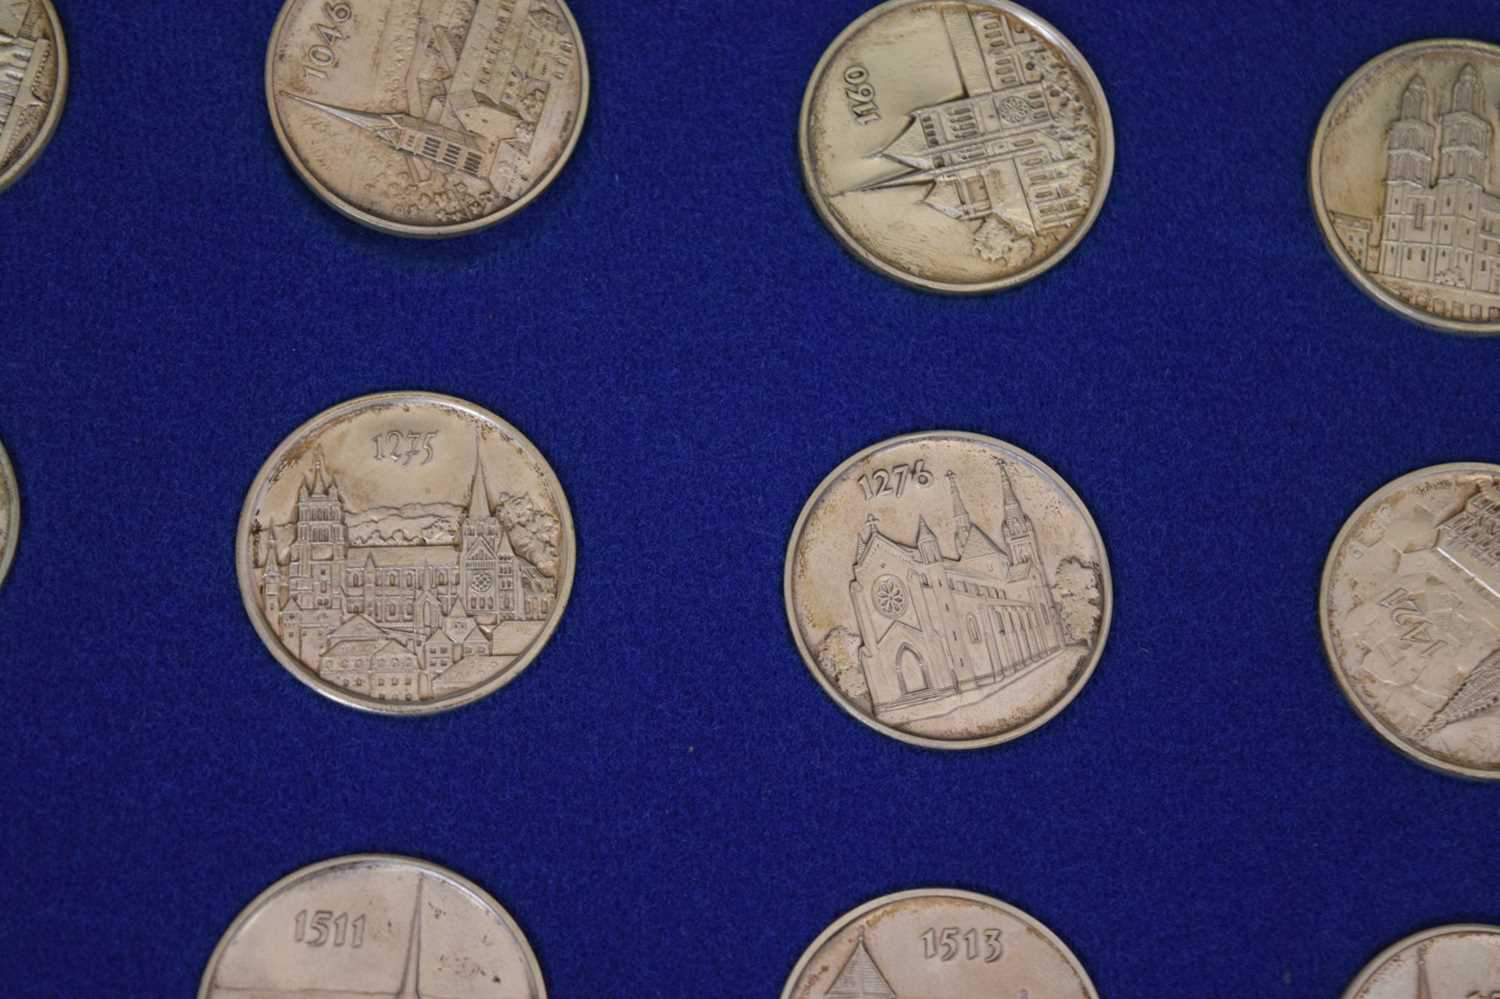 Numis Luzern limited edition 25 silver medallion set celebrating Swiss Churches - Image 7 of 11